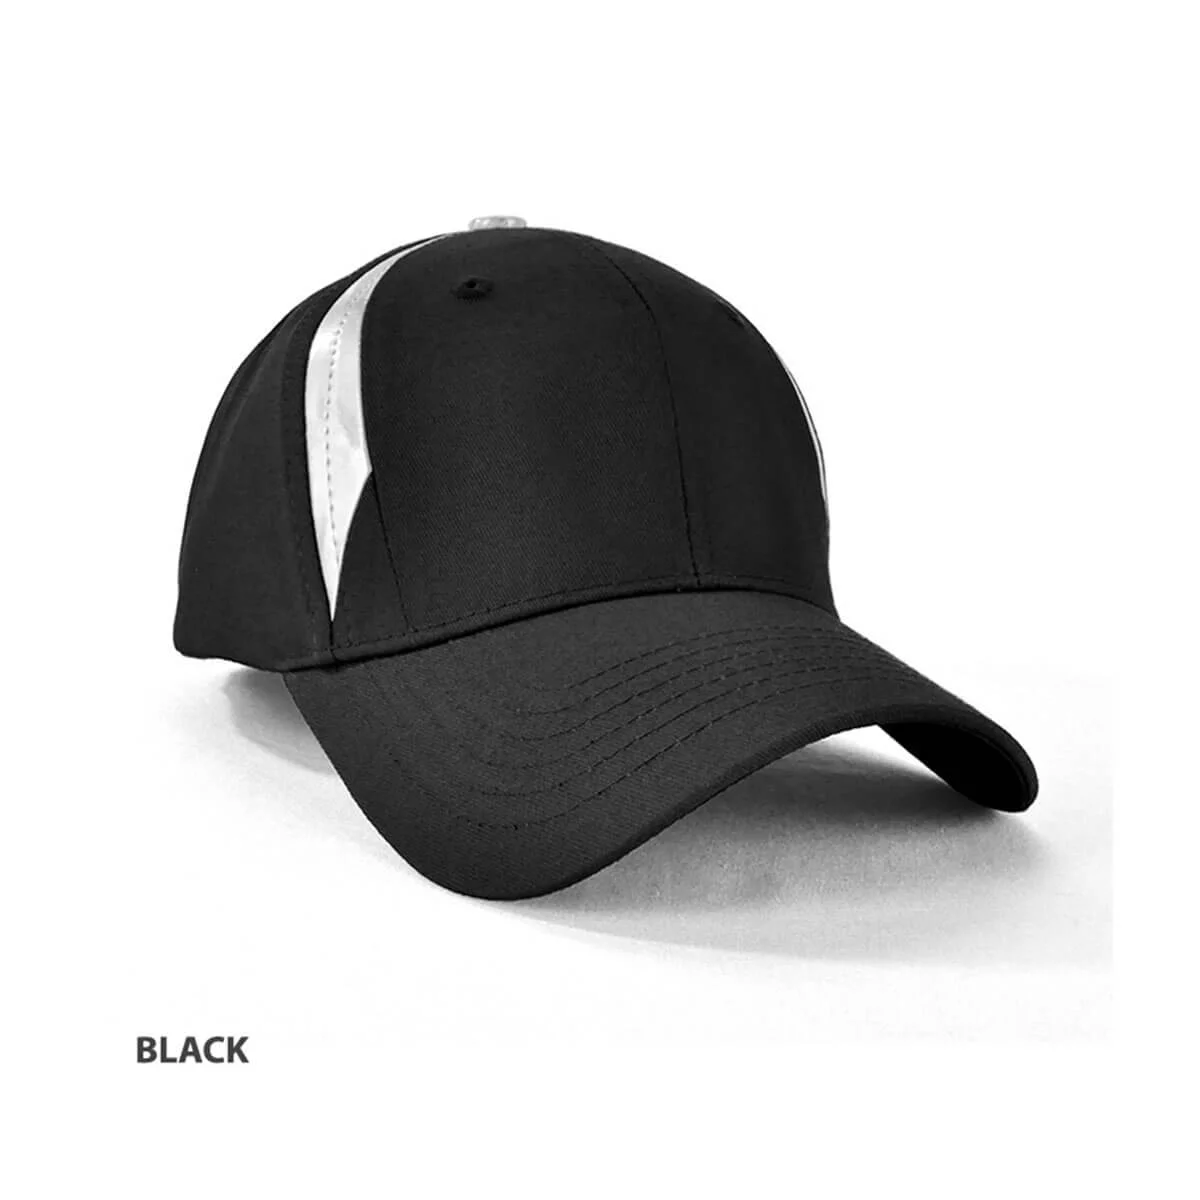 Bling Cap-Black